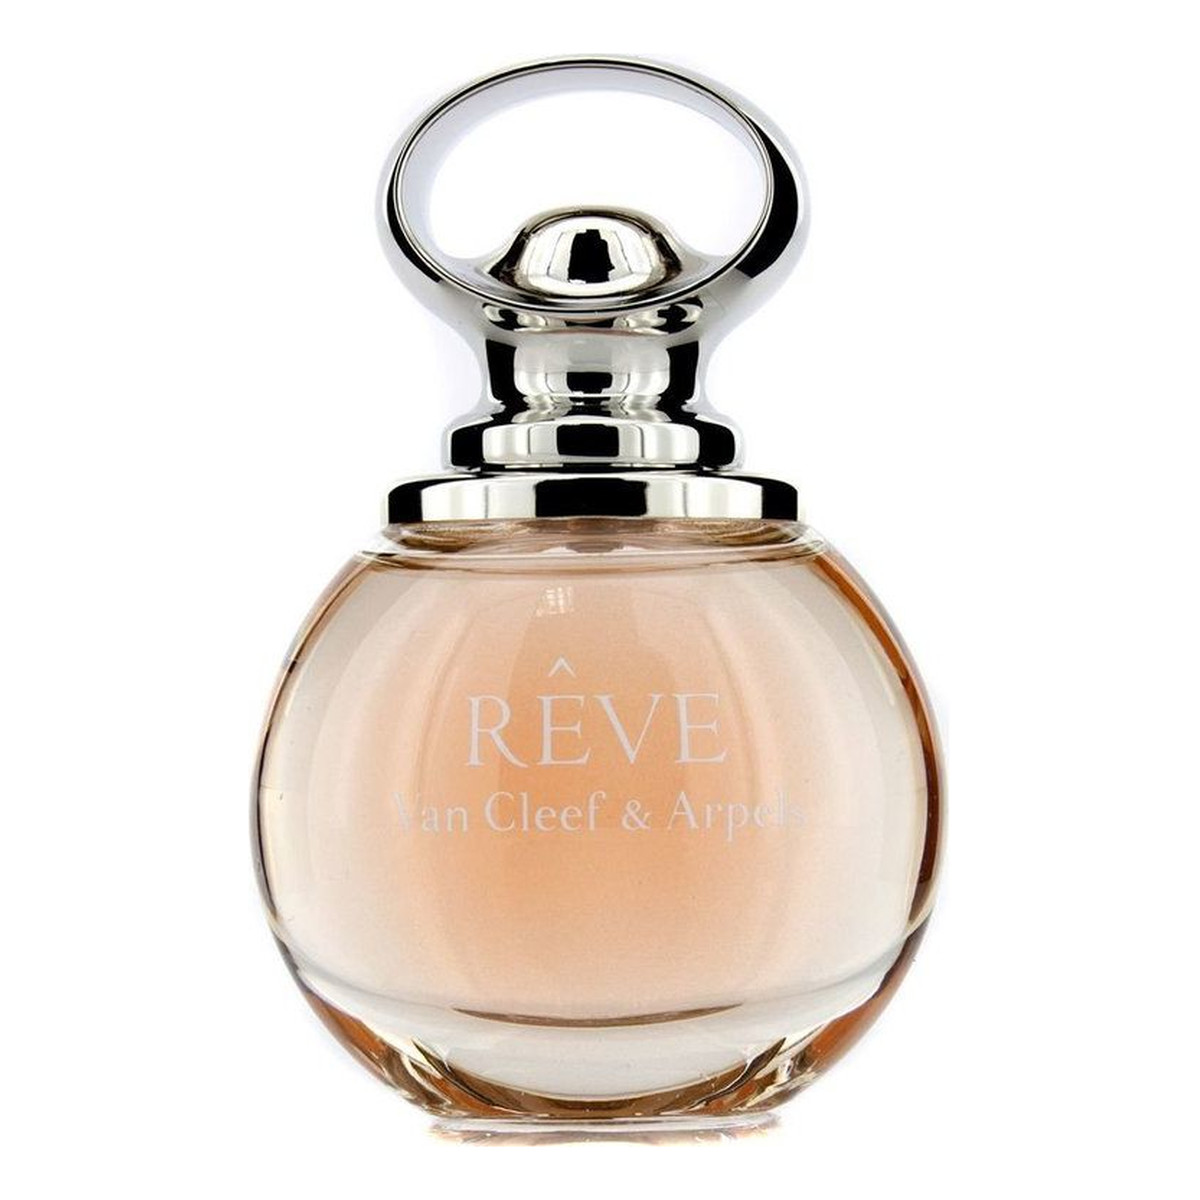 Van Cleef & Arpels Reve woda perfumowana 50ml